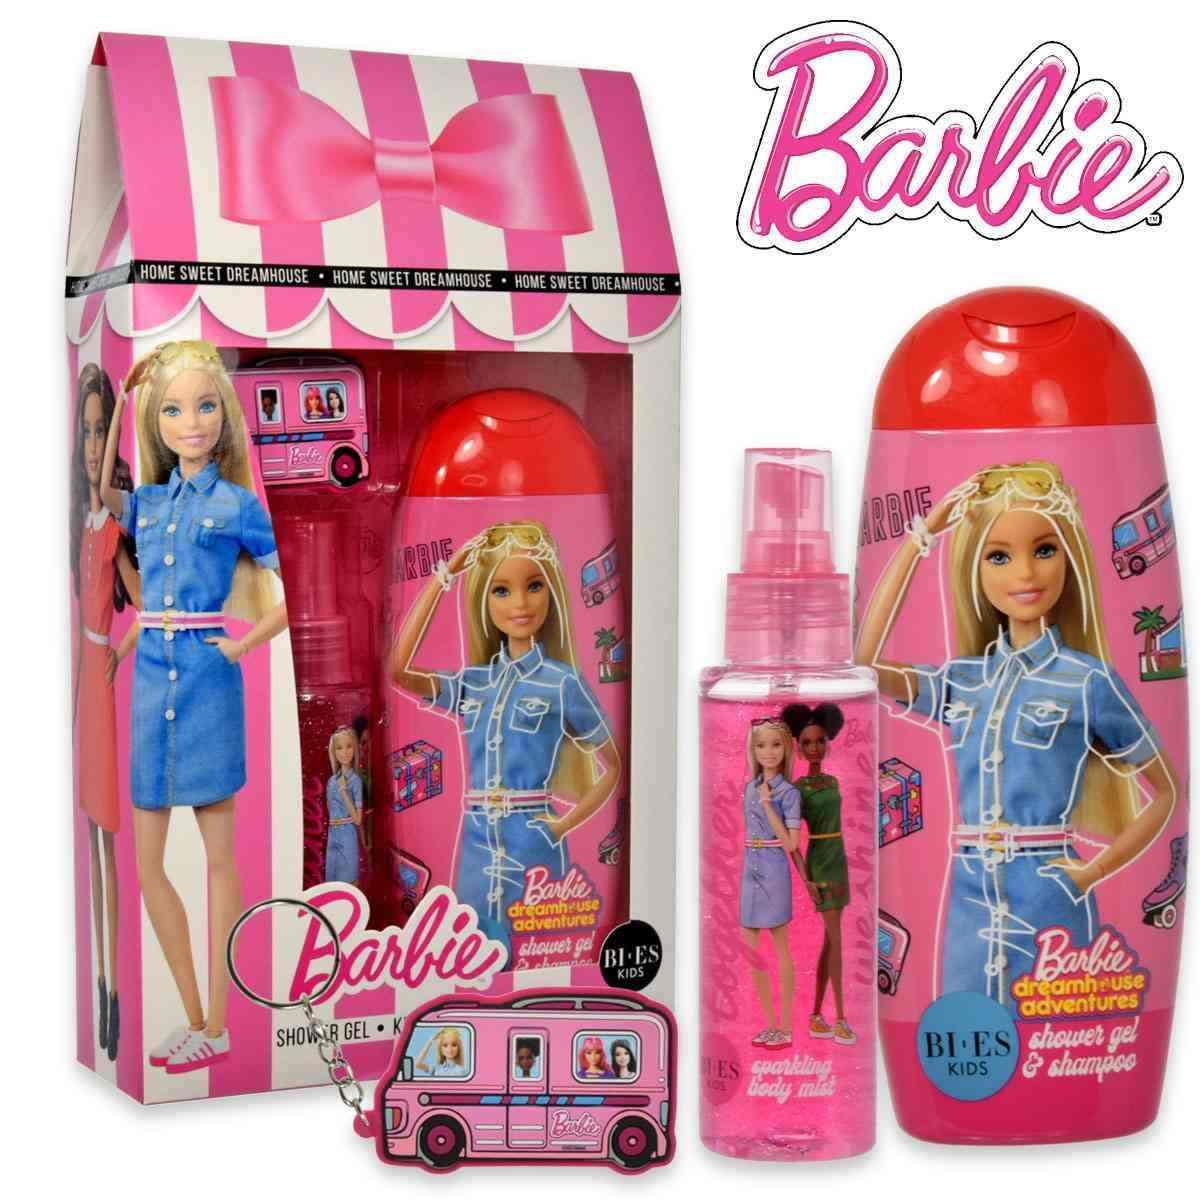 Barbie Barbie coffret edt 100 ml + shower gel 250 ml + portachiavi UD1584  5904413315841